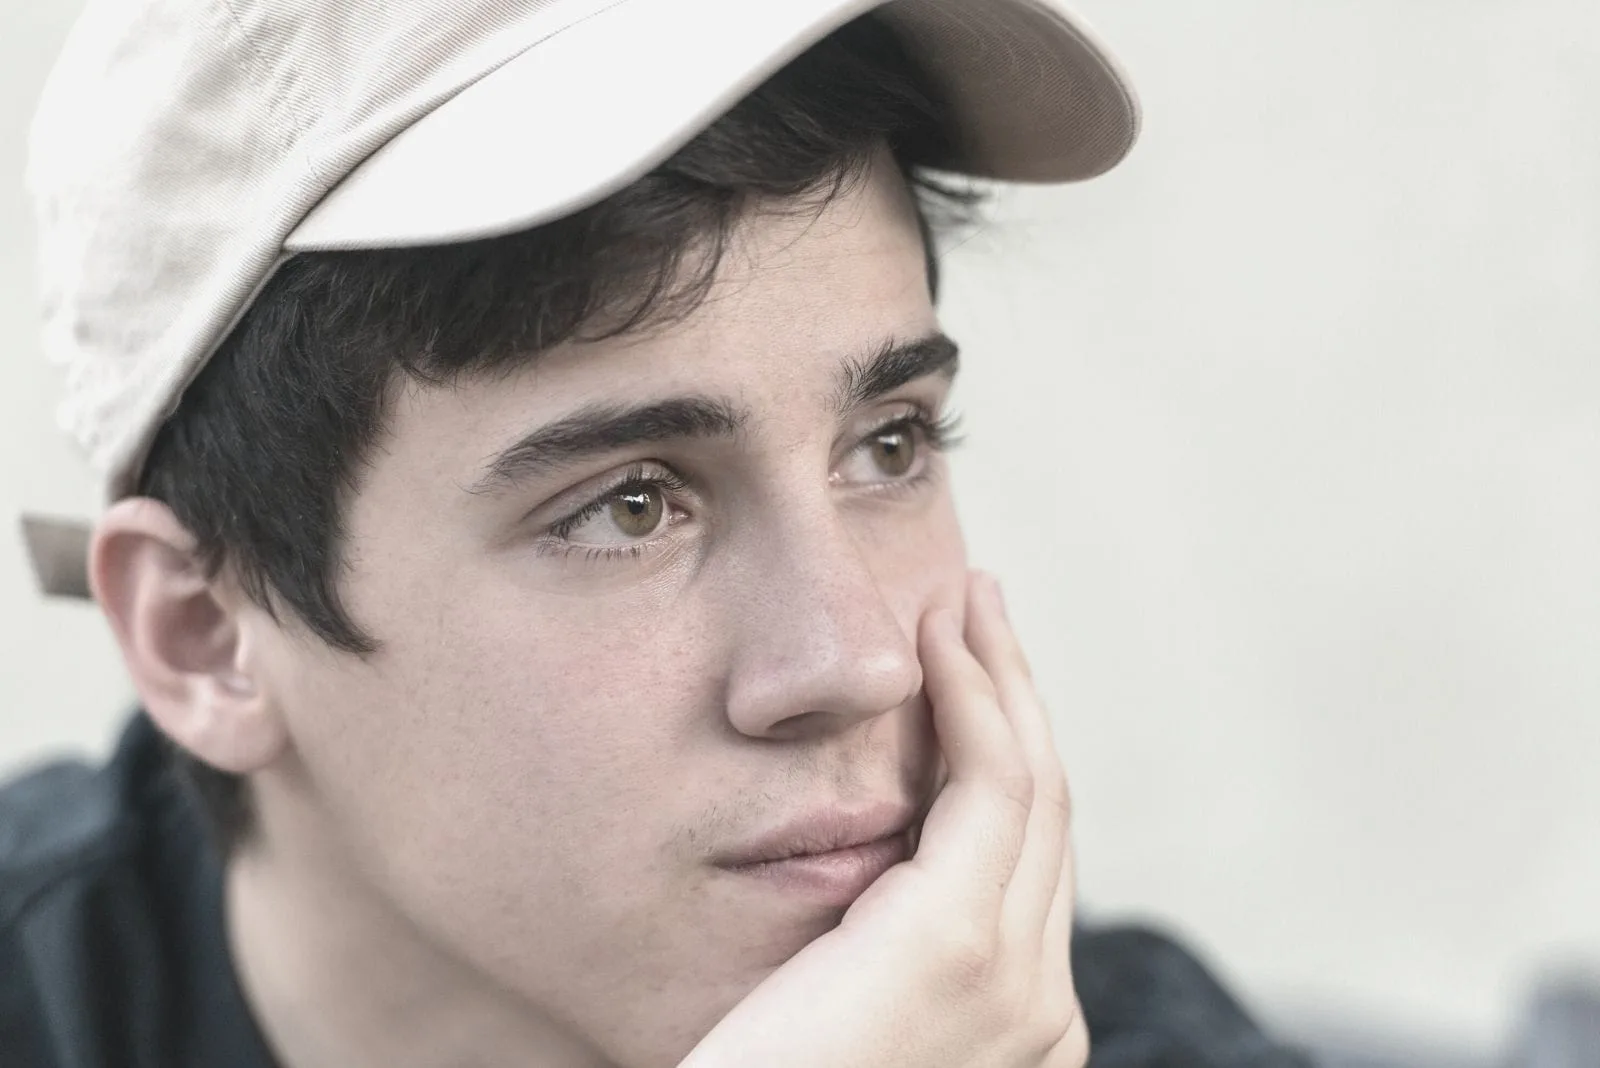 pensive young man looking away wearing a cap